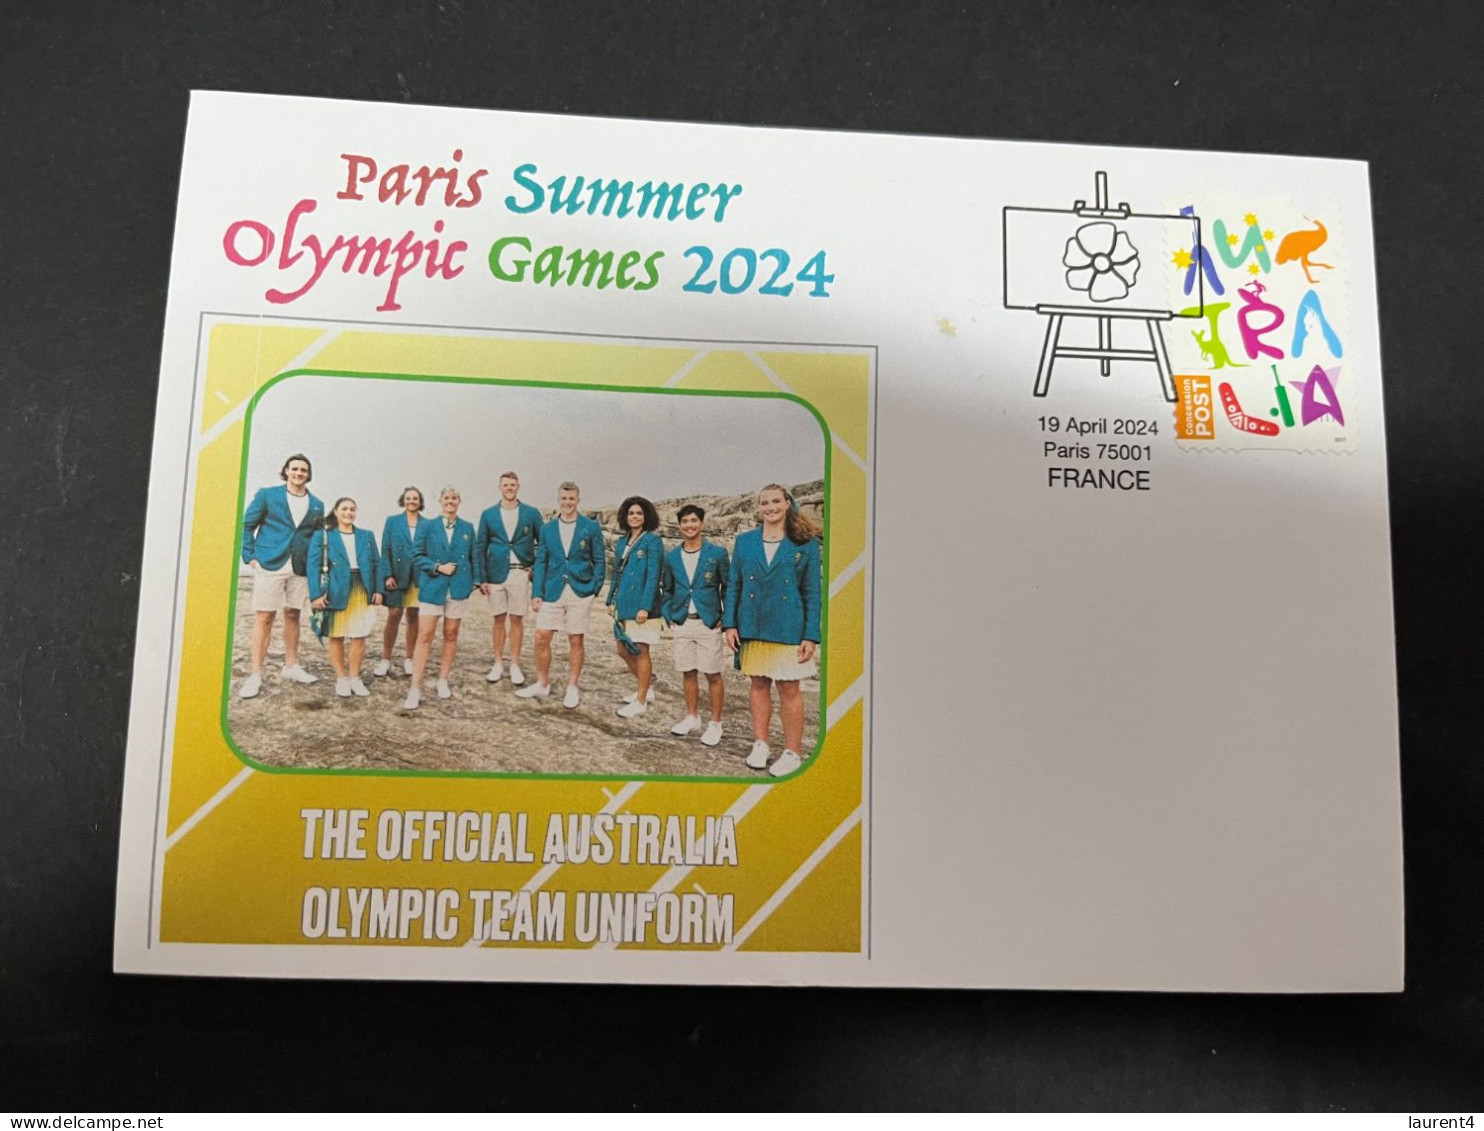 6-5-2024 (4 Z 17) Paris Olympic Games 2024 - Official Australia Olympic Team Uniform - Summer 2024: Paris